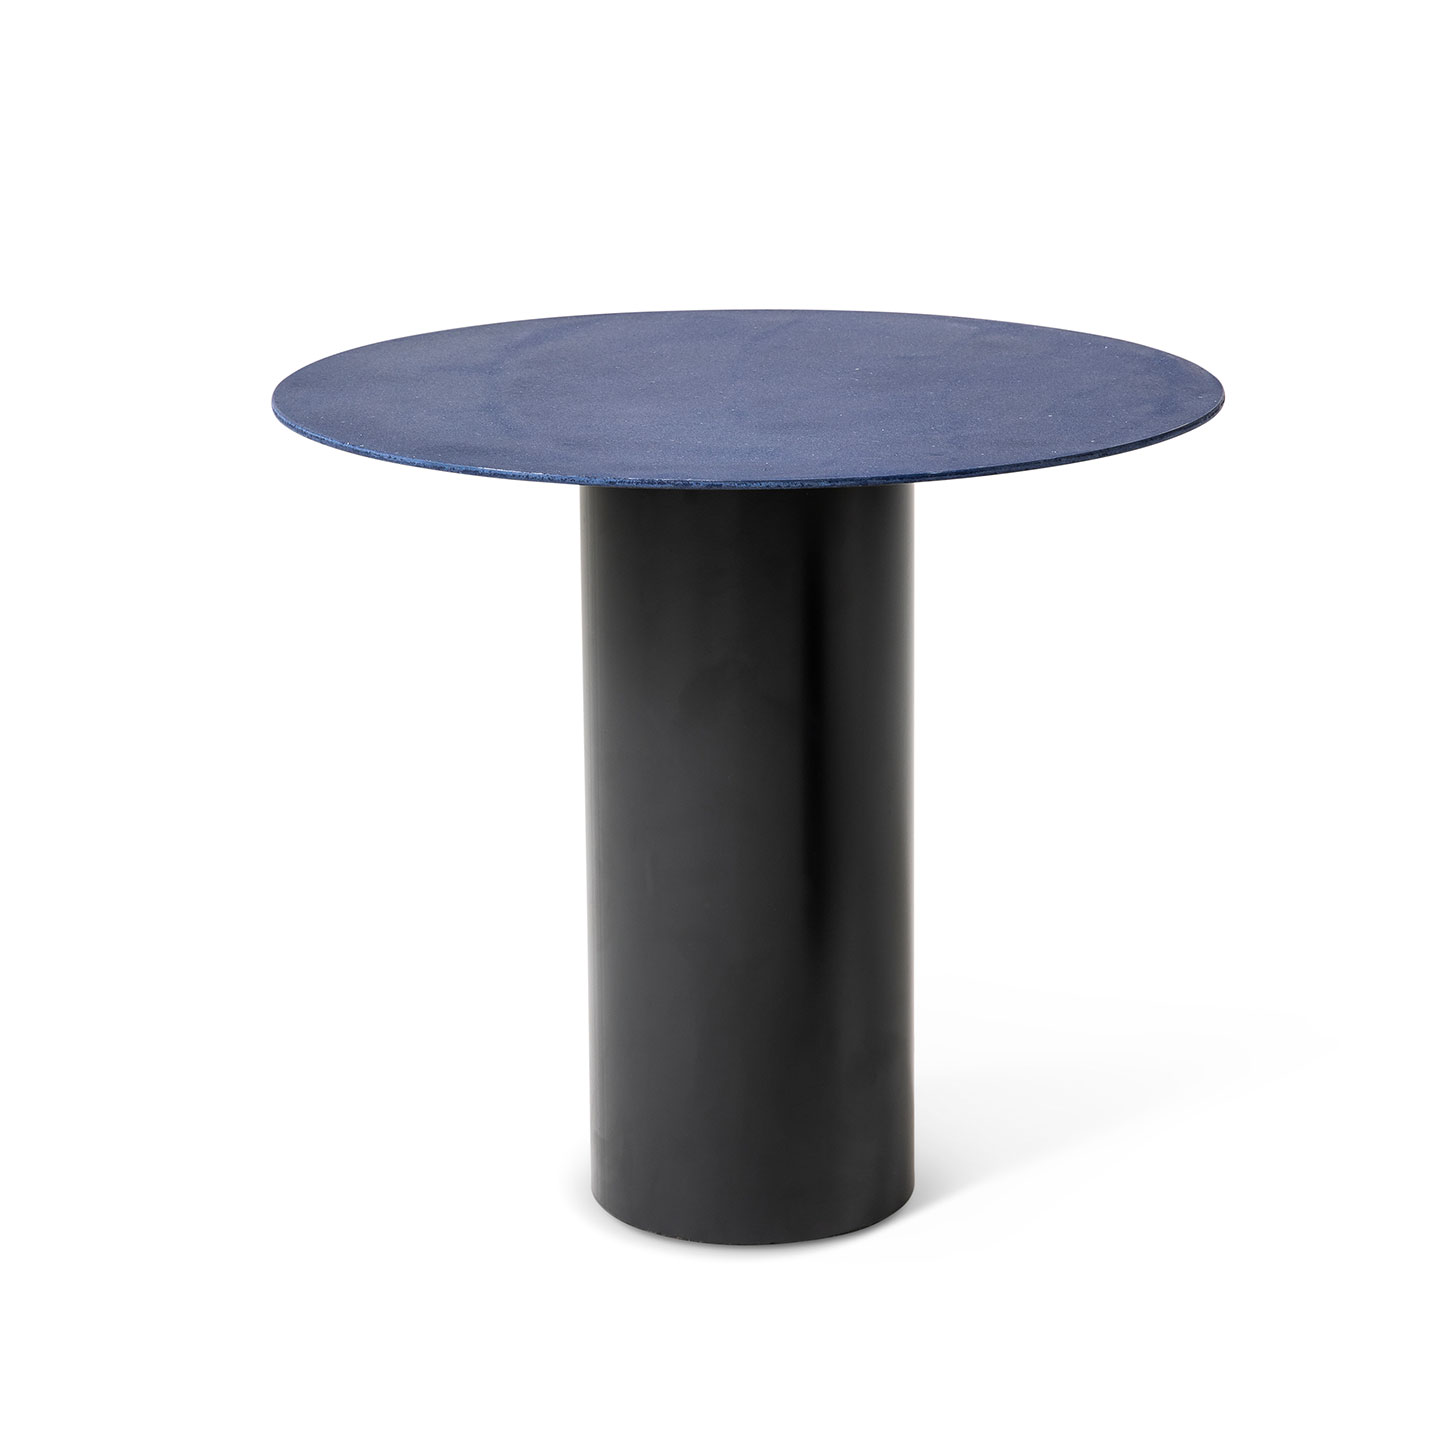 Haworth Mush Table with Blue Marble w/aluminum circular top and black base